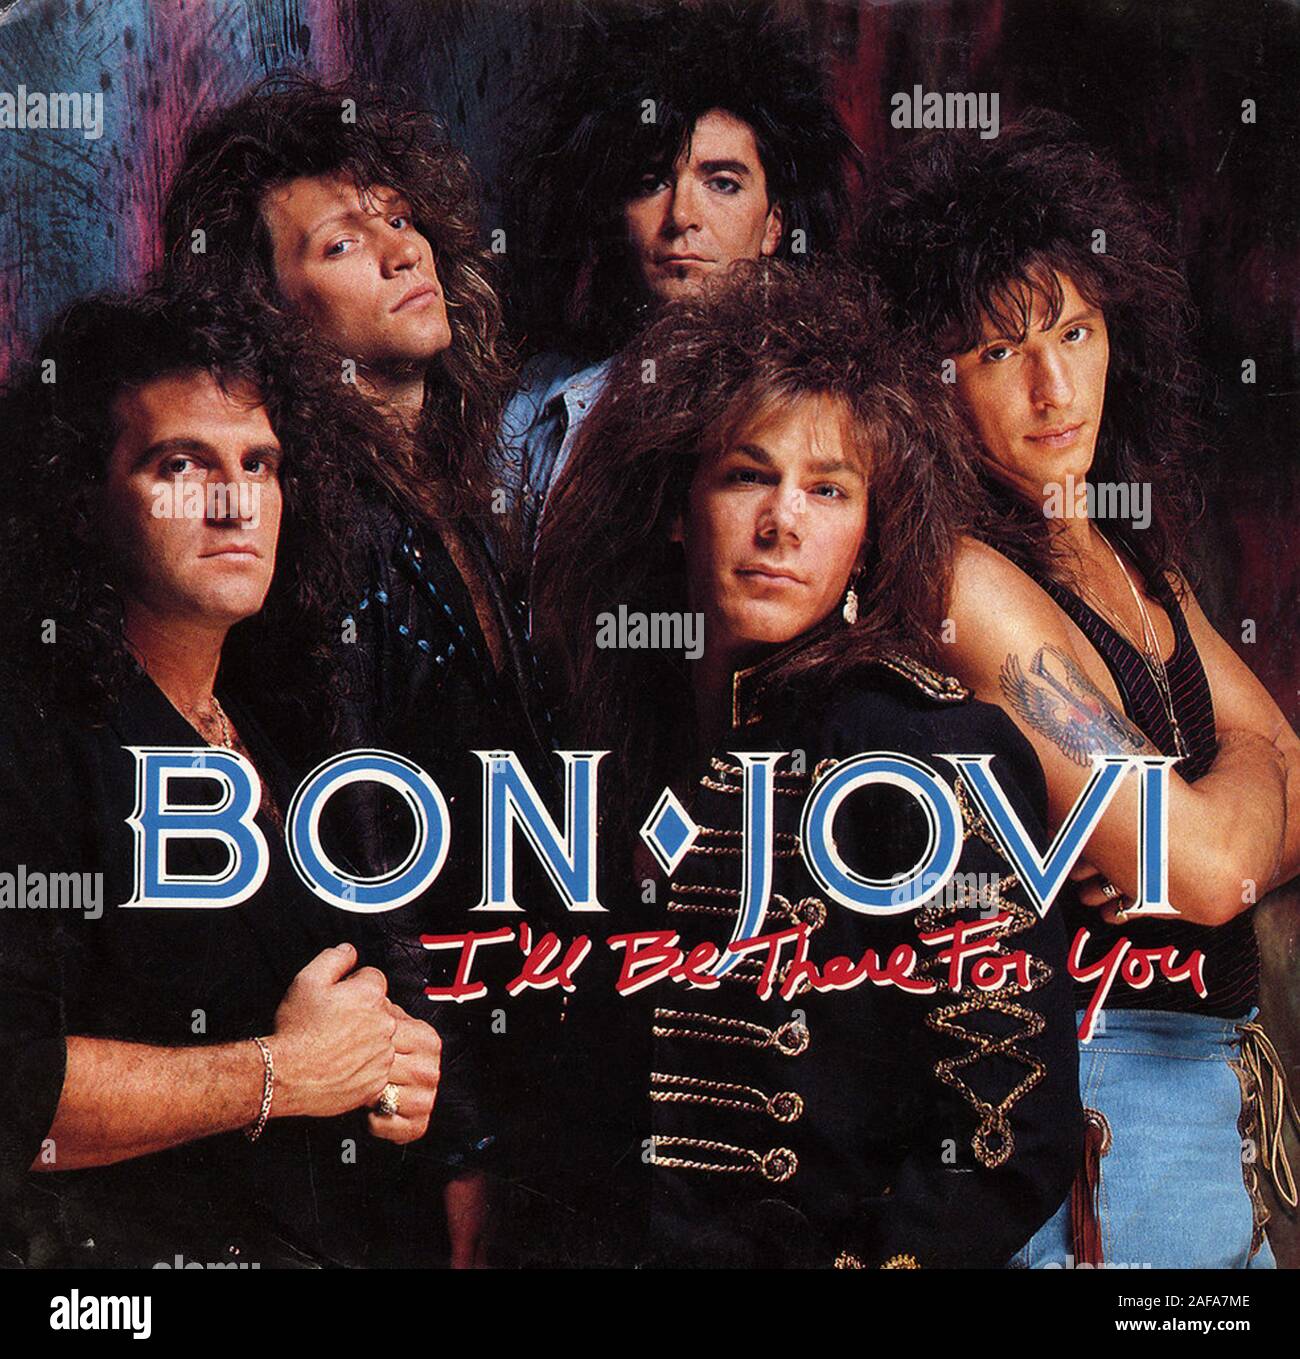 Bon Jovi - I'll Be There For You - Vintage vinyl album cover Stock Photo -  Alamy